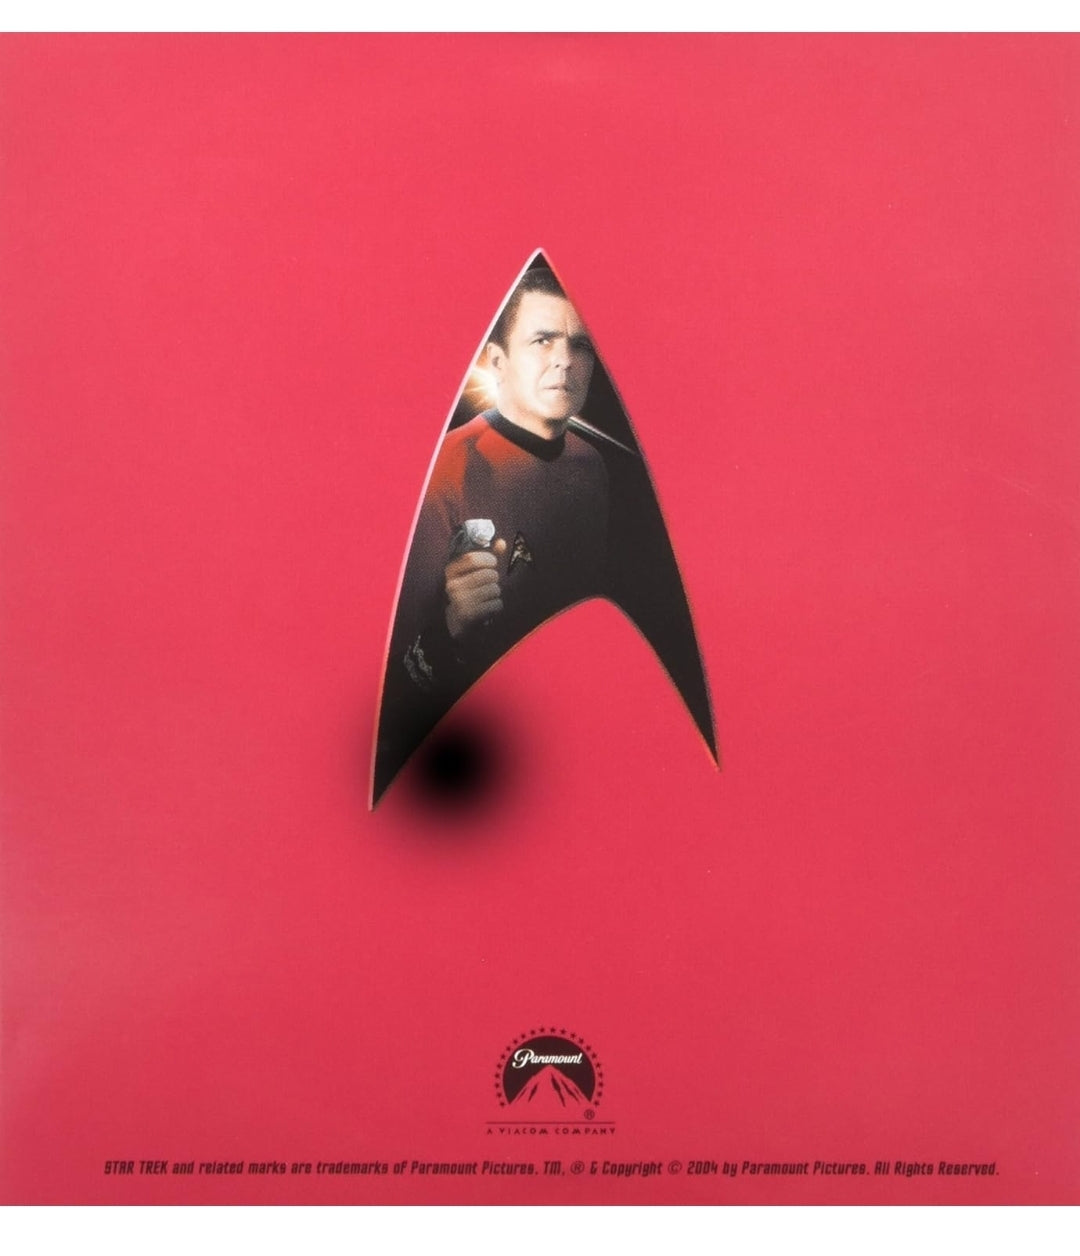 Star Trek: The Original Series "Complete Season 3" on DVD in Red Hard Case (2004)